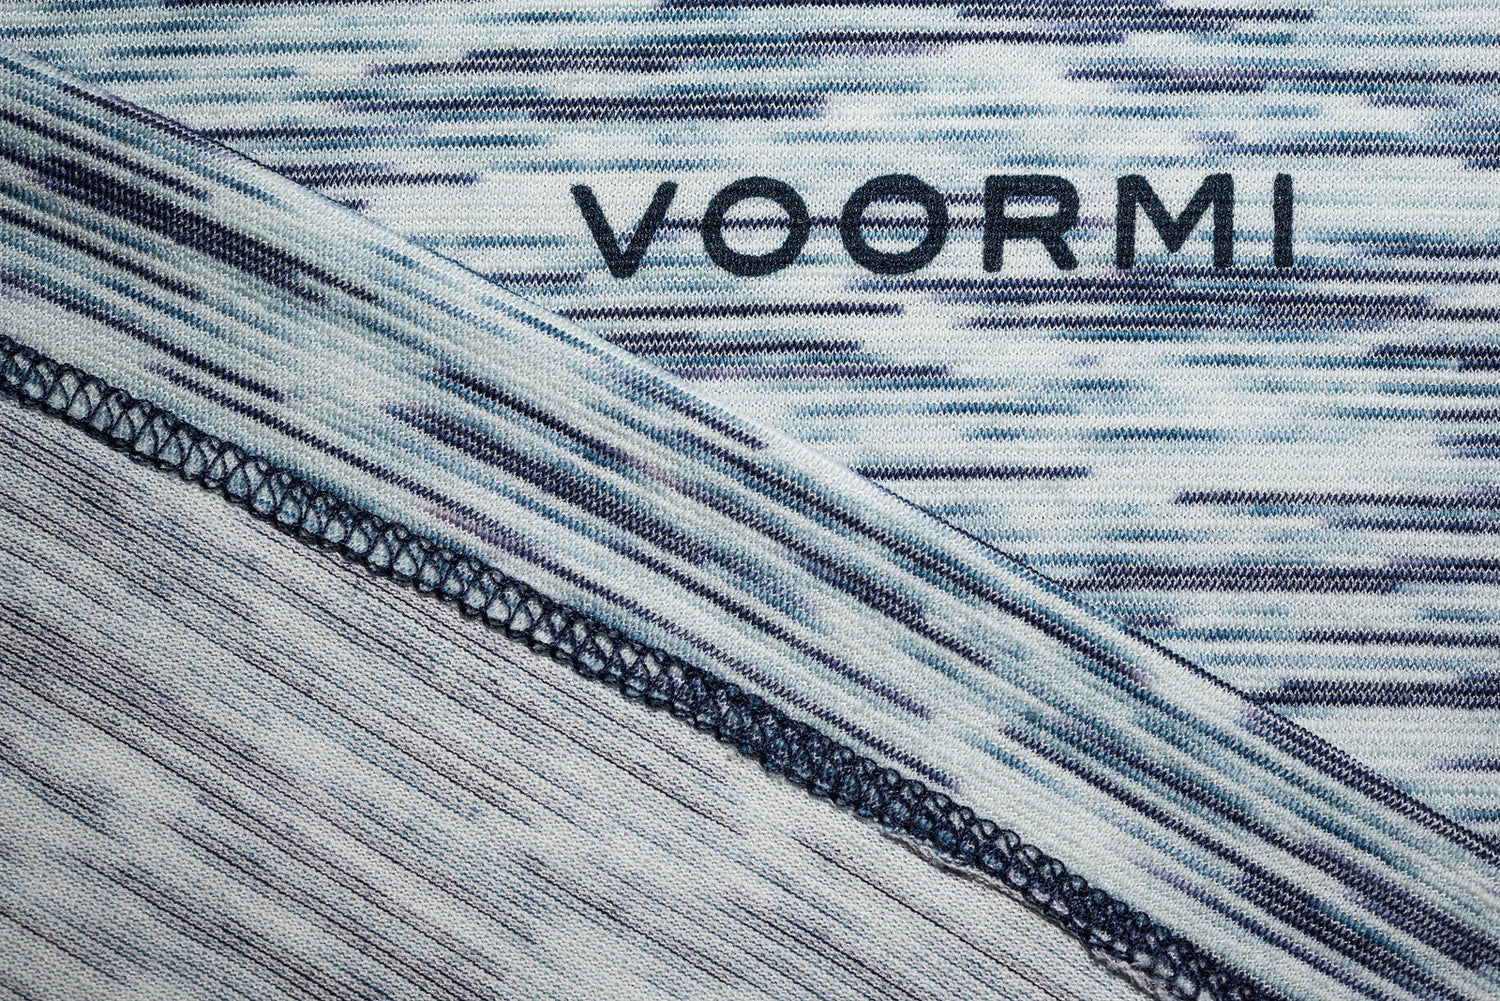 Lifehacker: Voormi is Breaking Through the Boundaries of Merino